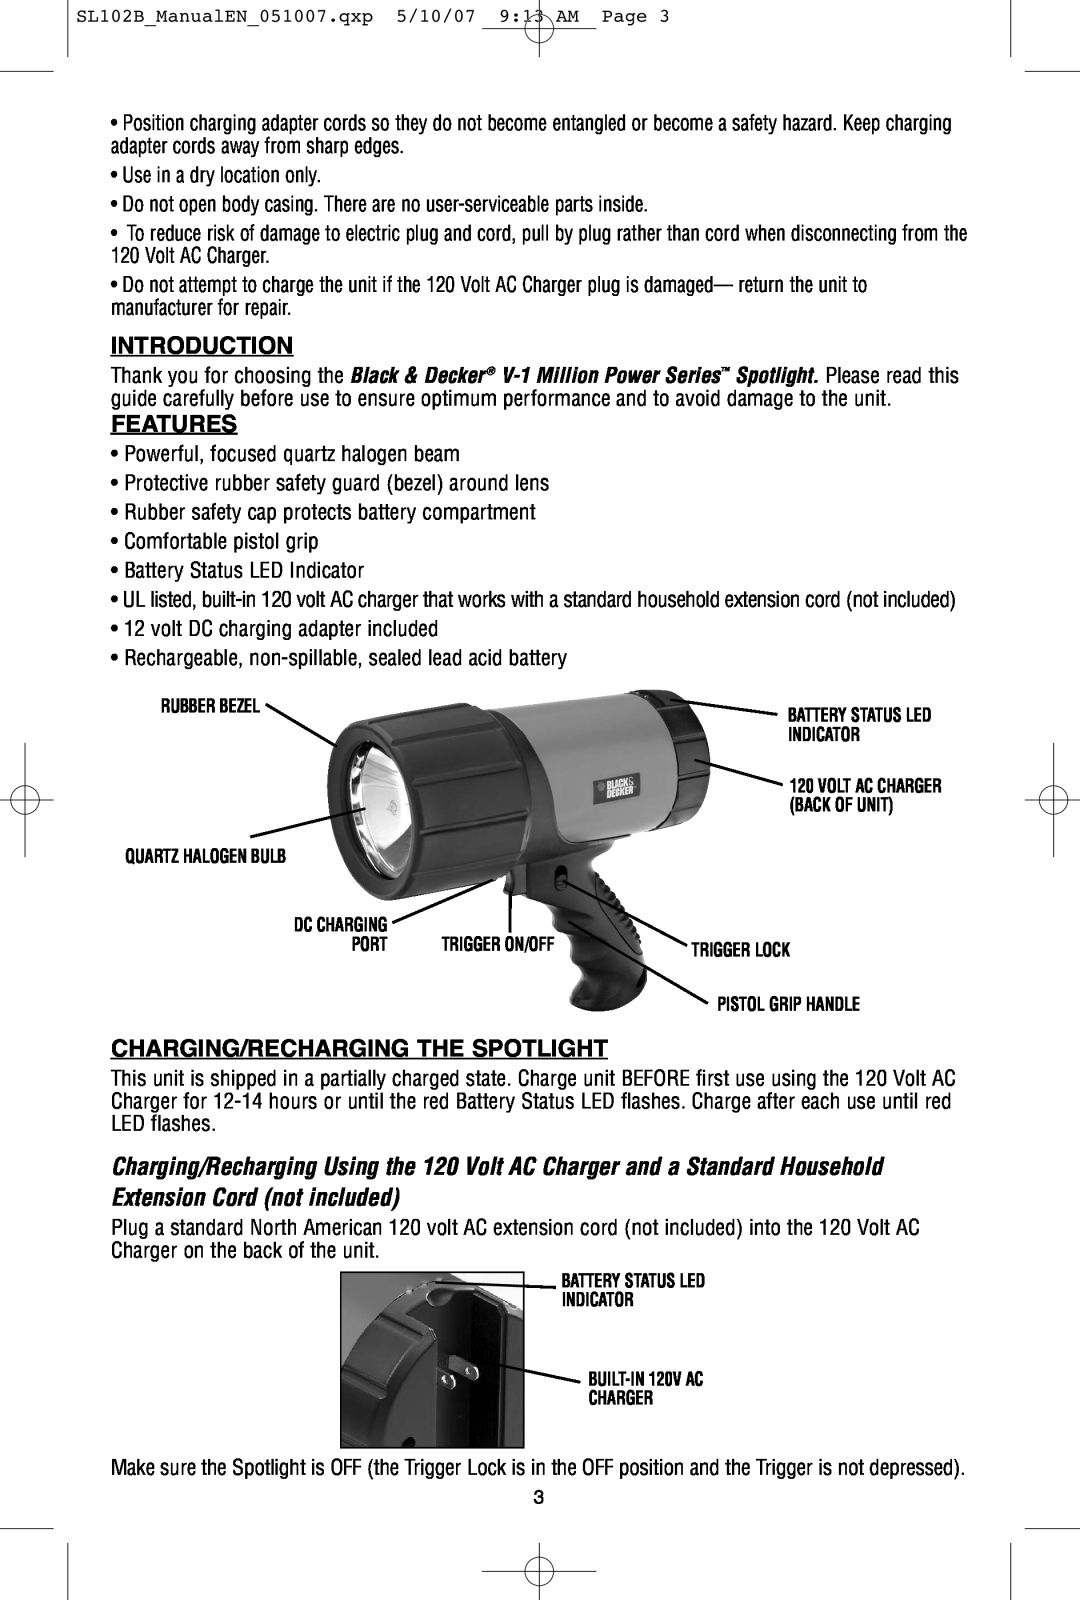 Black & Decker 90515795, V-1 Million instruction manual Introduction, Features, Charging/Recharging The Spotlight 